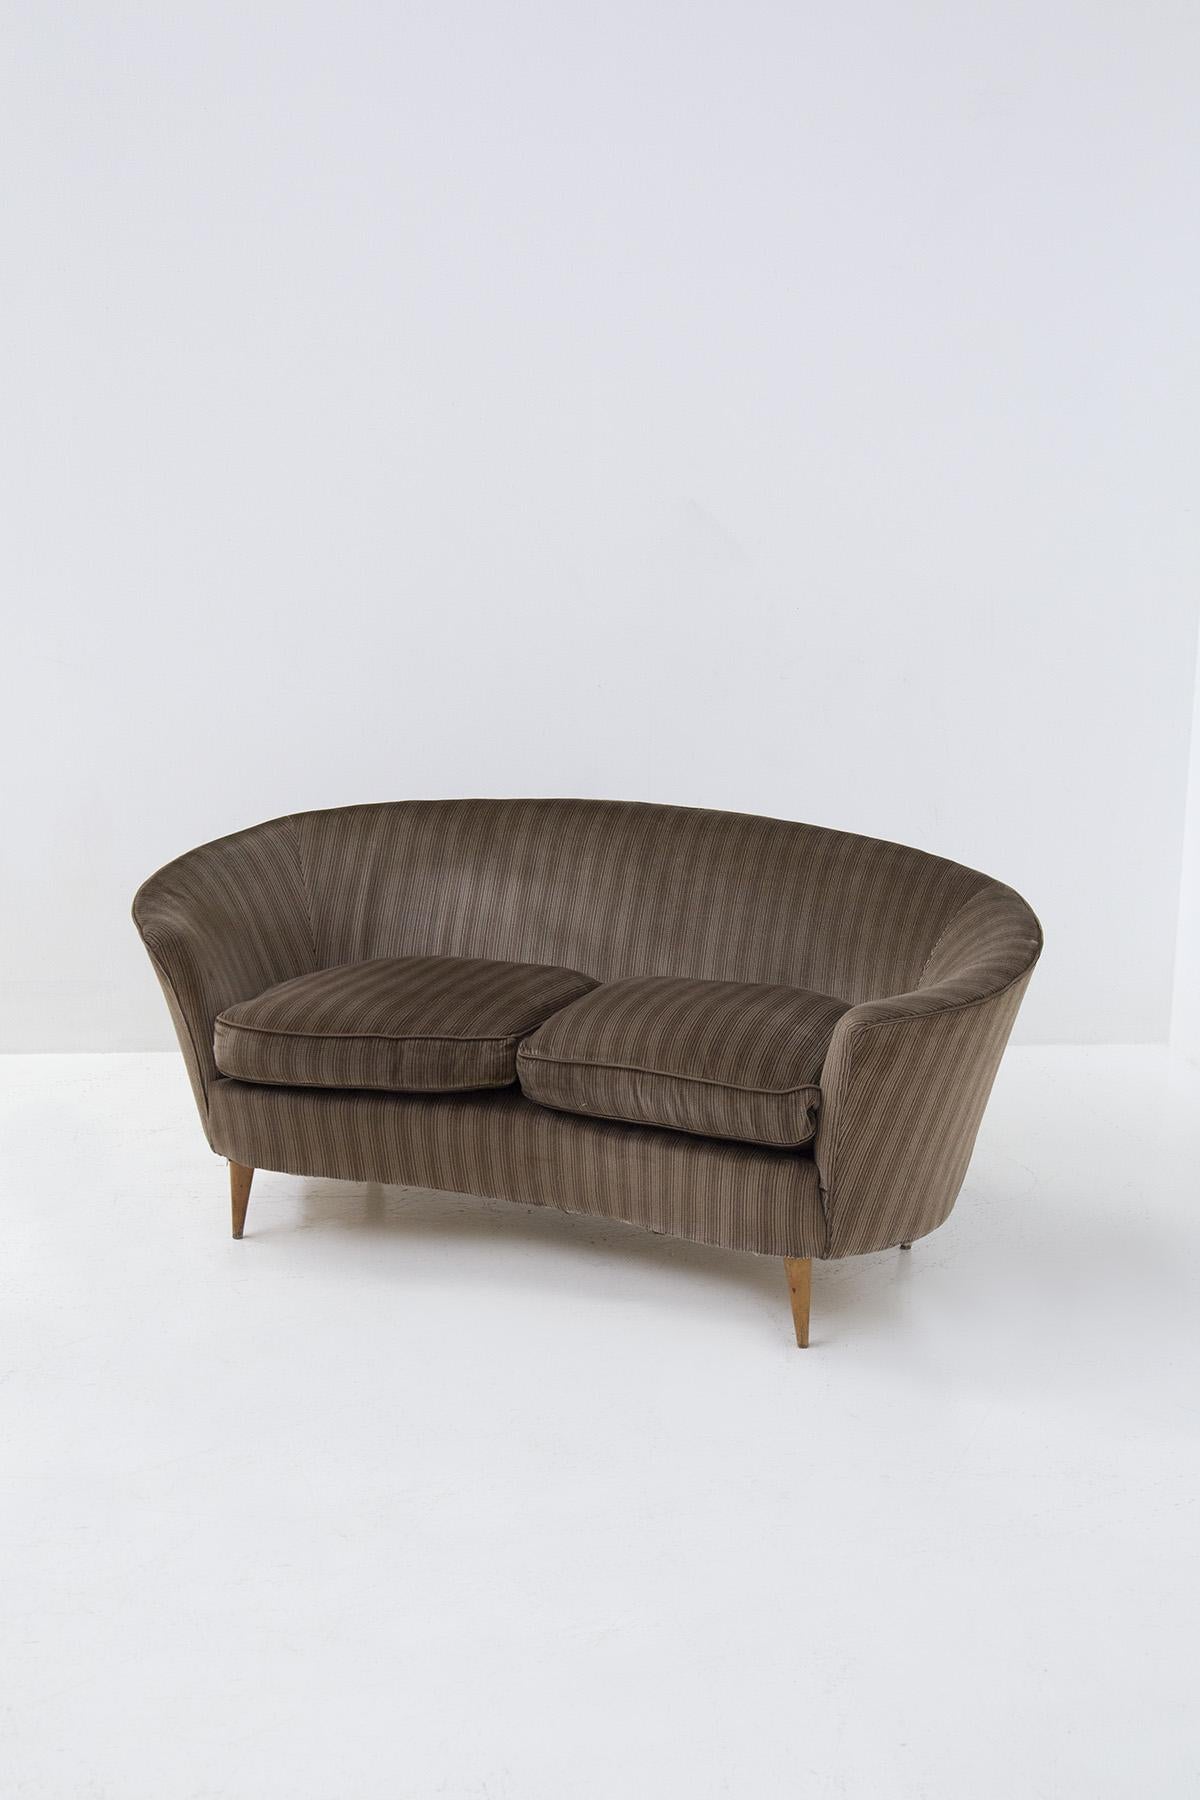 Mid-Century Modern Italian Sofa attributed to Ico Parisi in original fabric For Sale